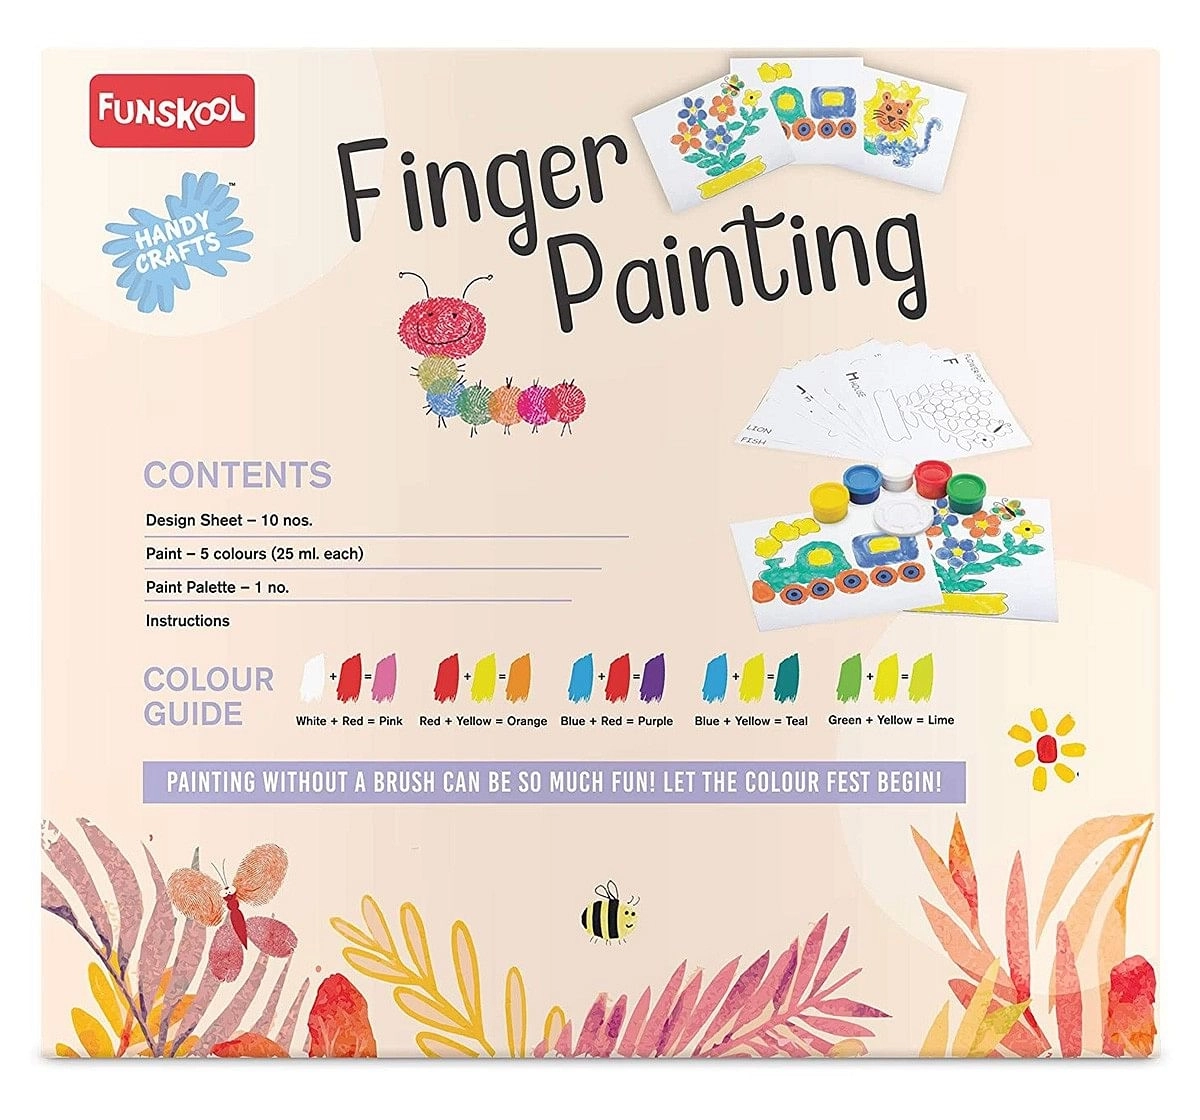 Handycraft NE WB Finger Painting (Multi color), 4Y+